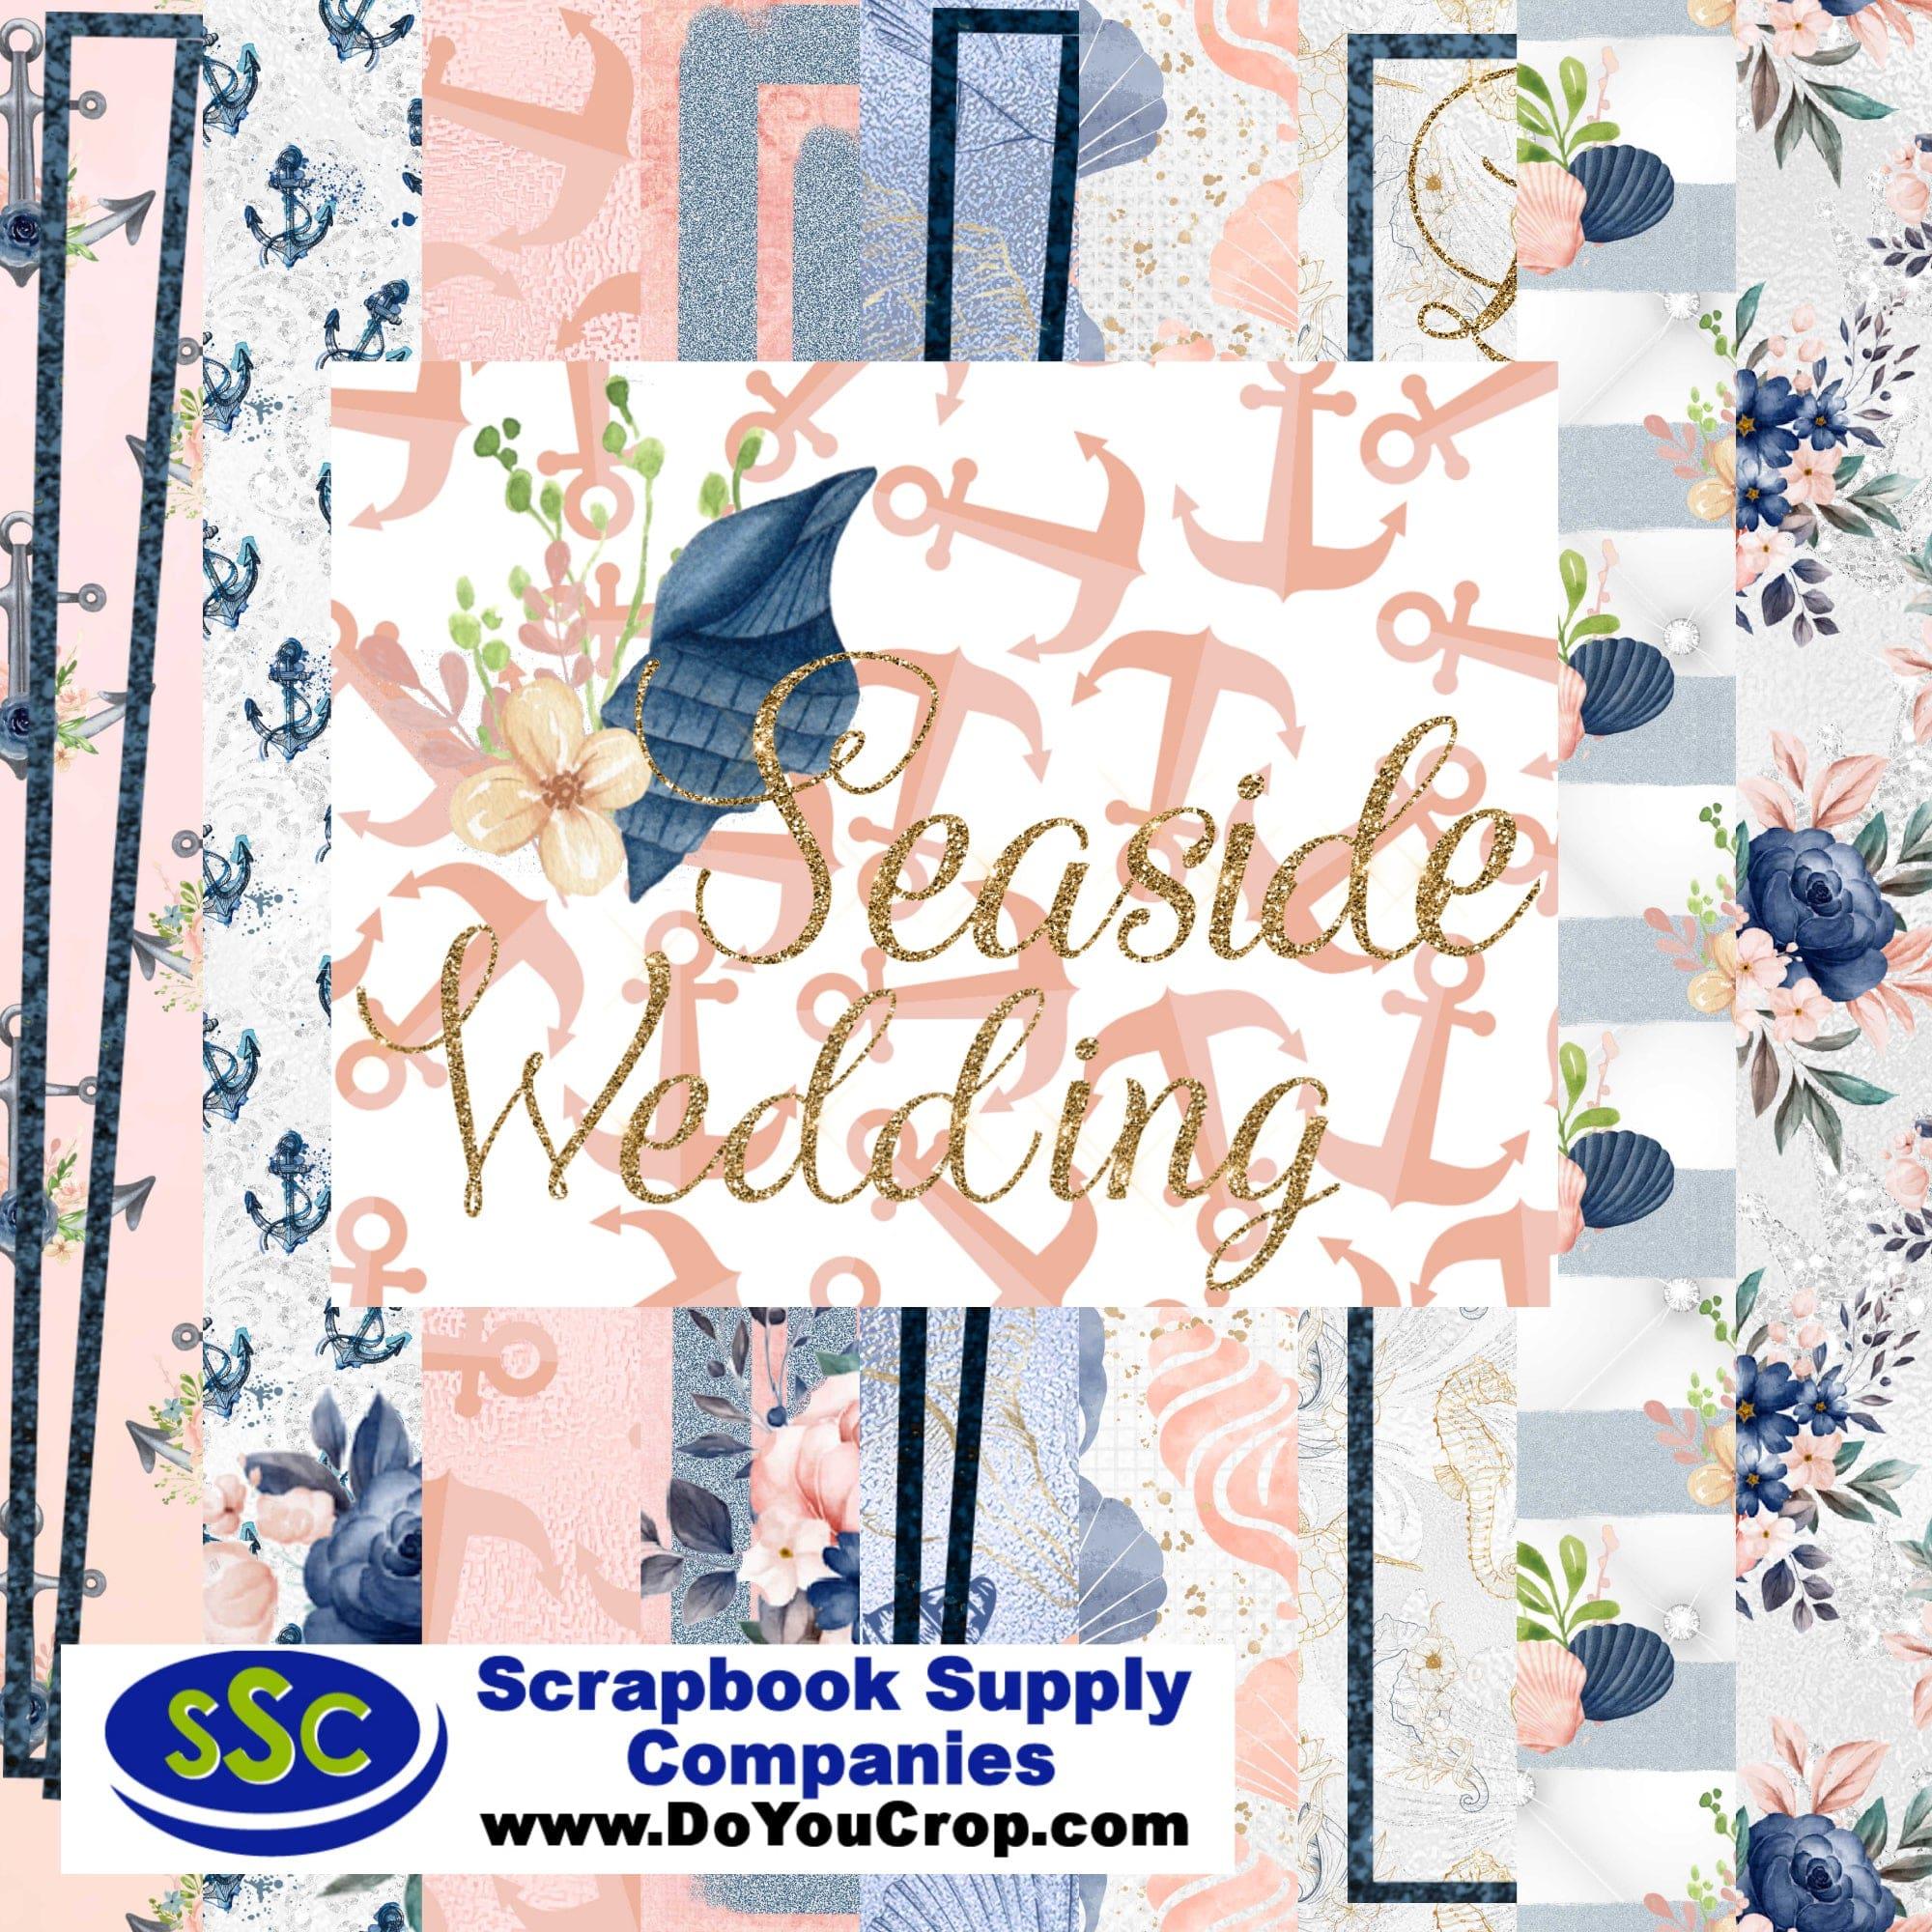 Seaside Wedding 12 x 12 Scrapbook Paper & Embellishment Kit by SSC Designs